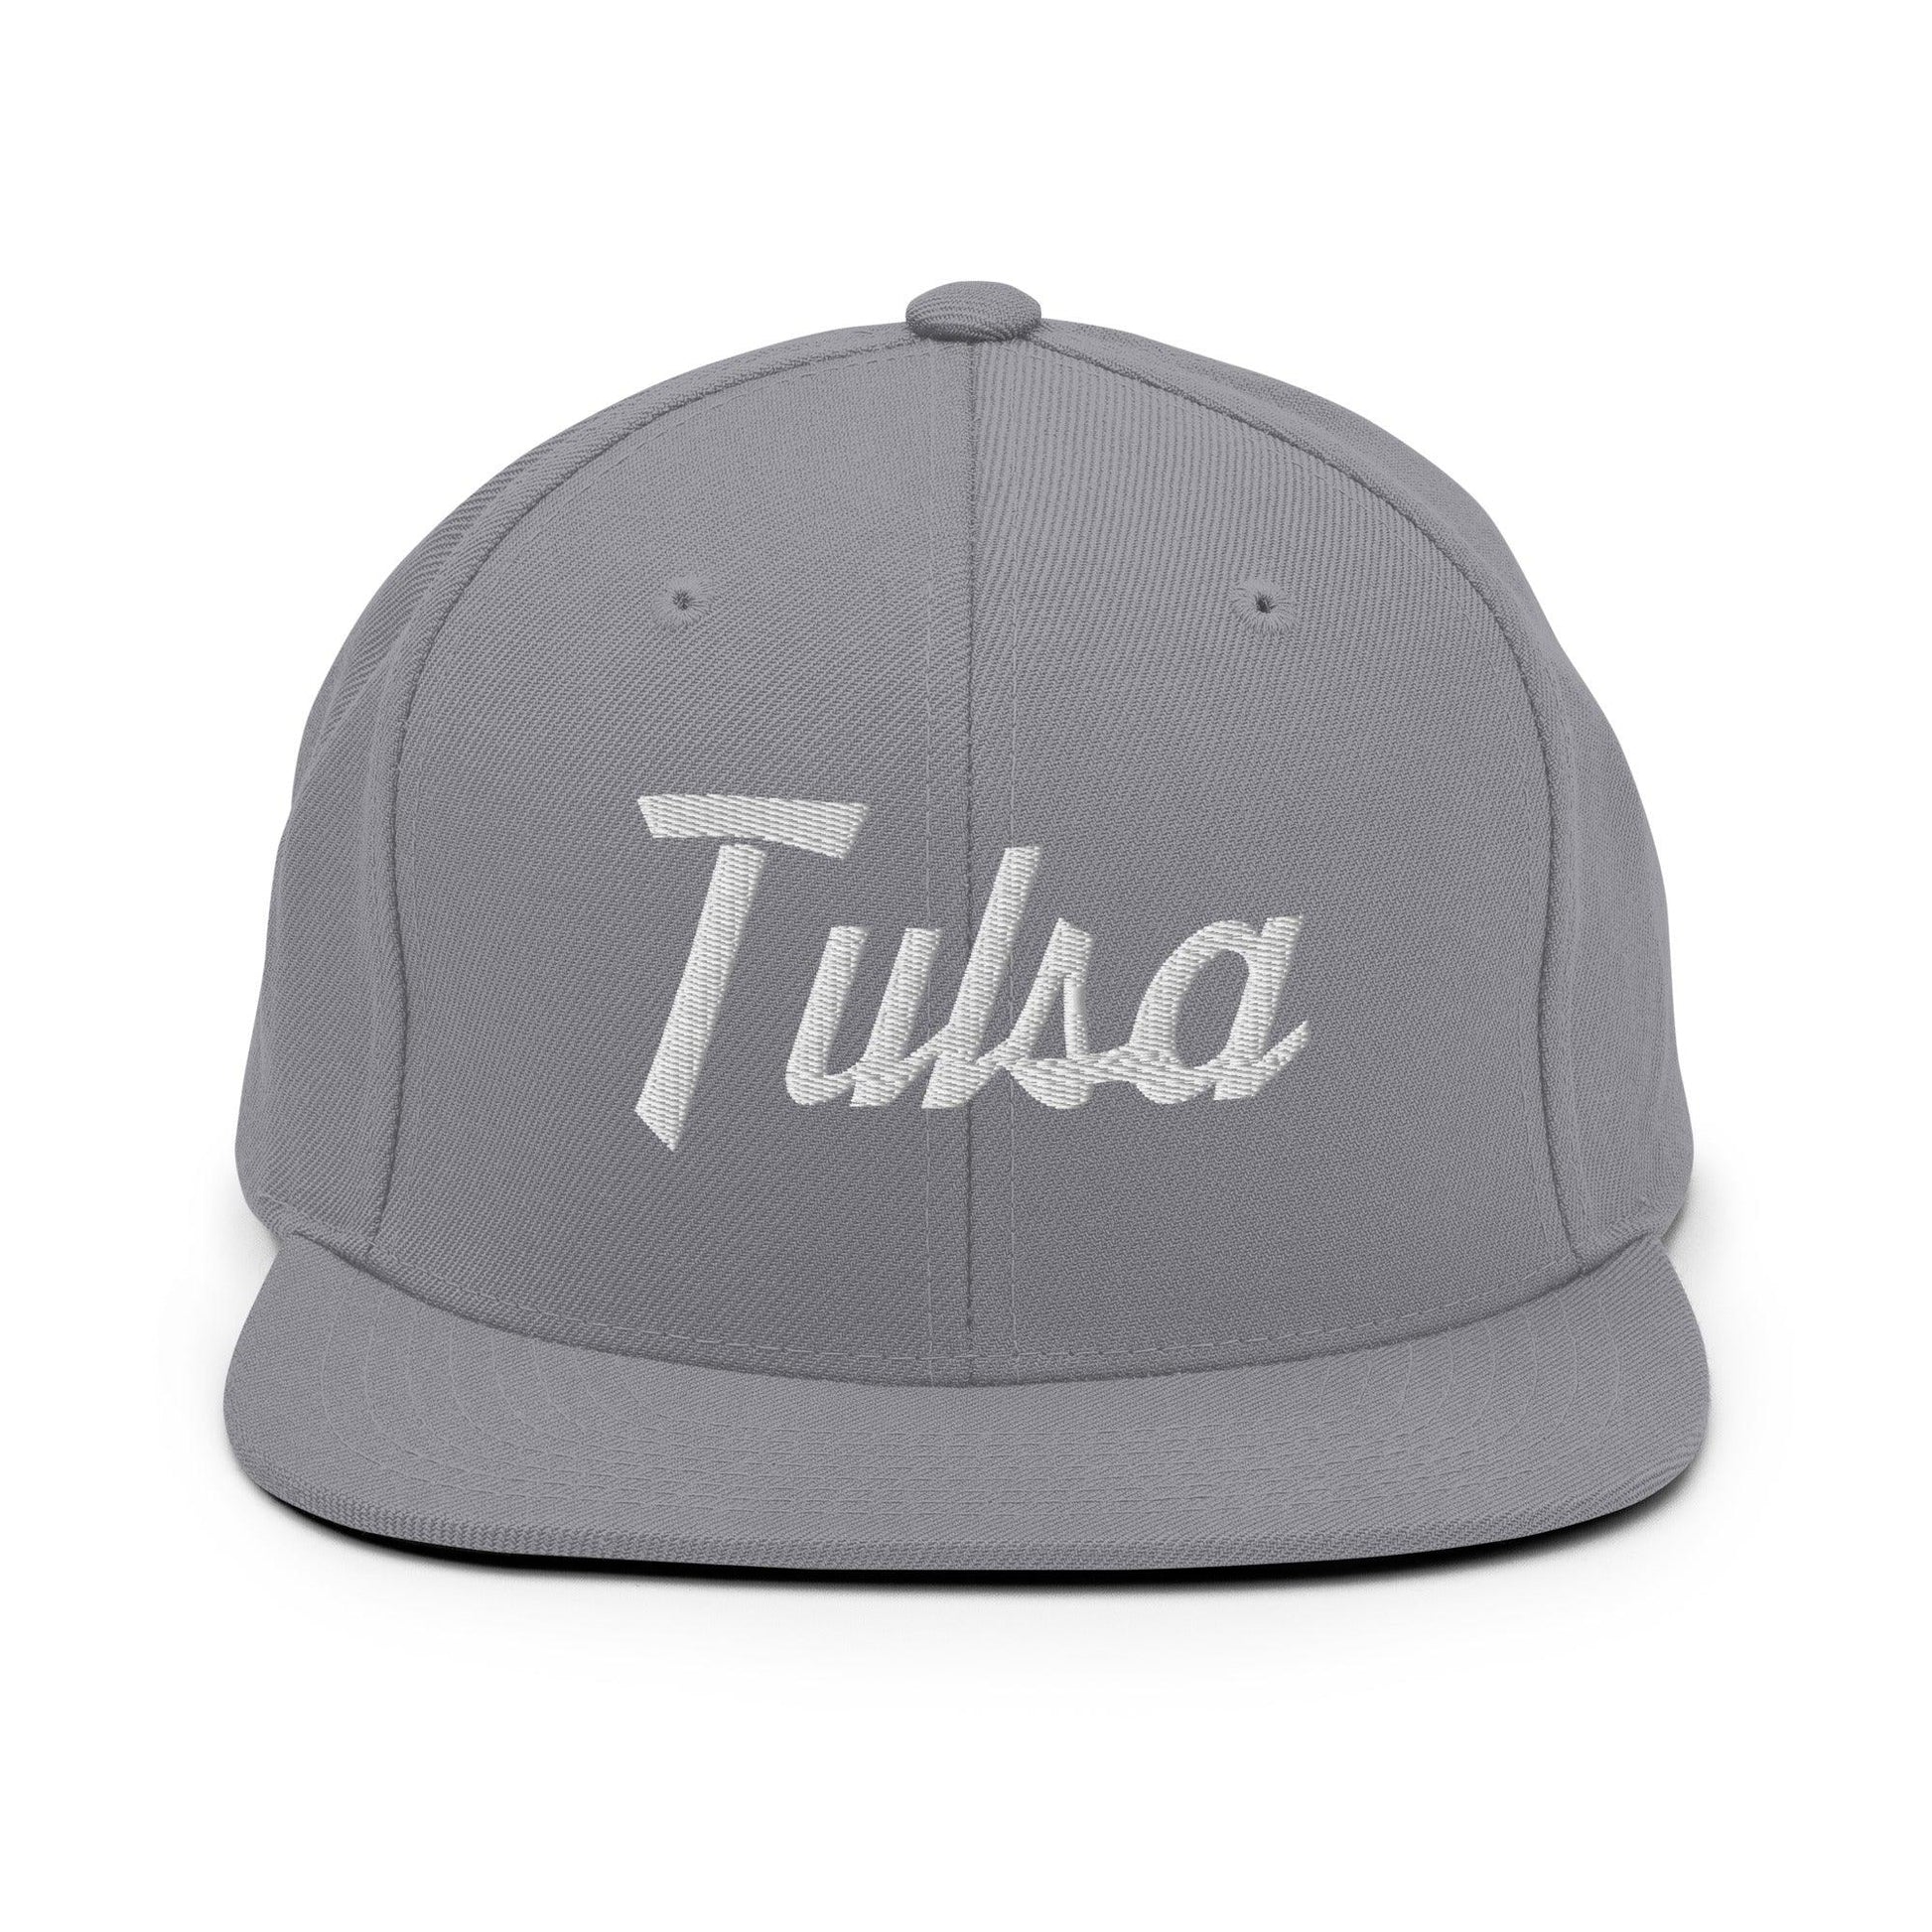 Tulsa Script Snapback Hat Silver